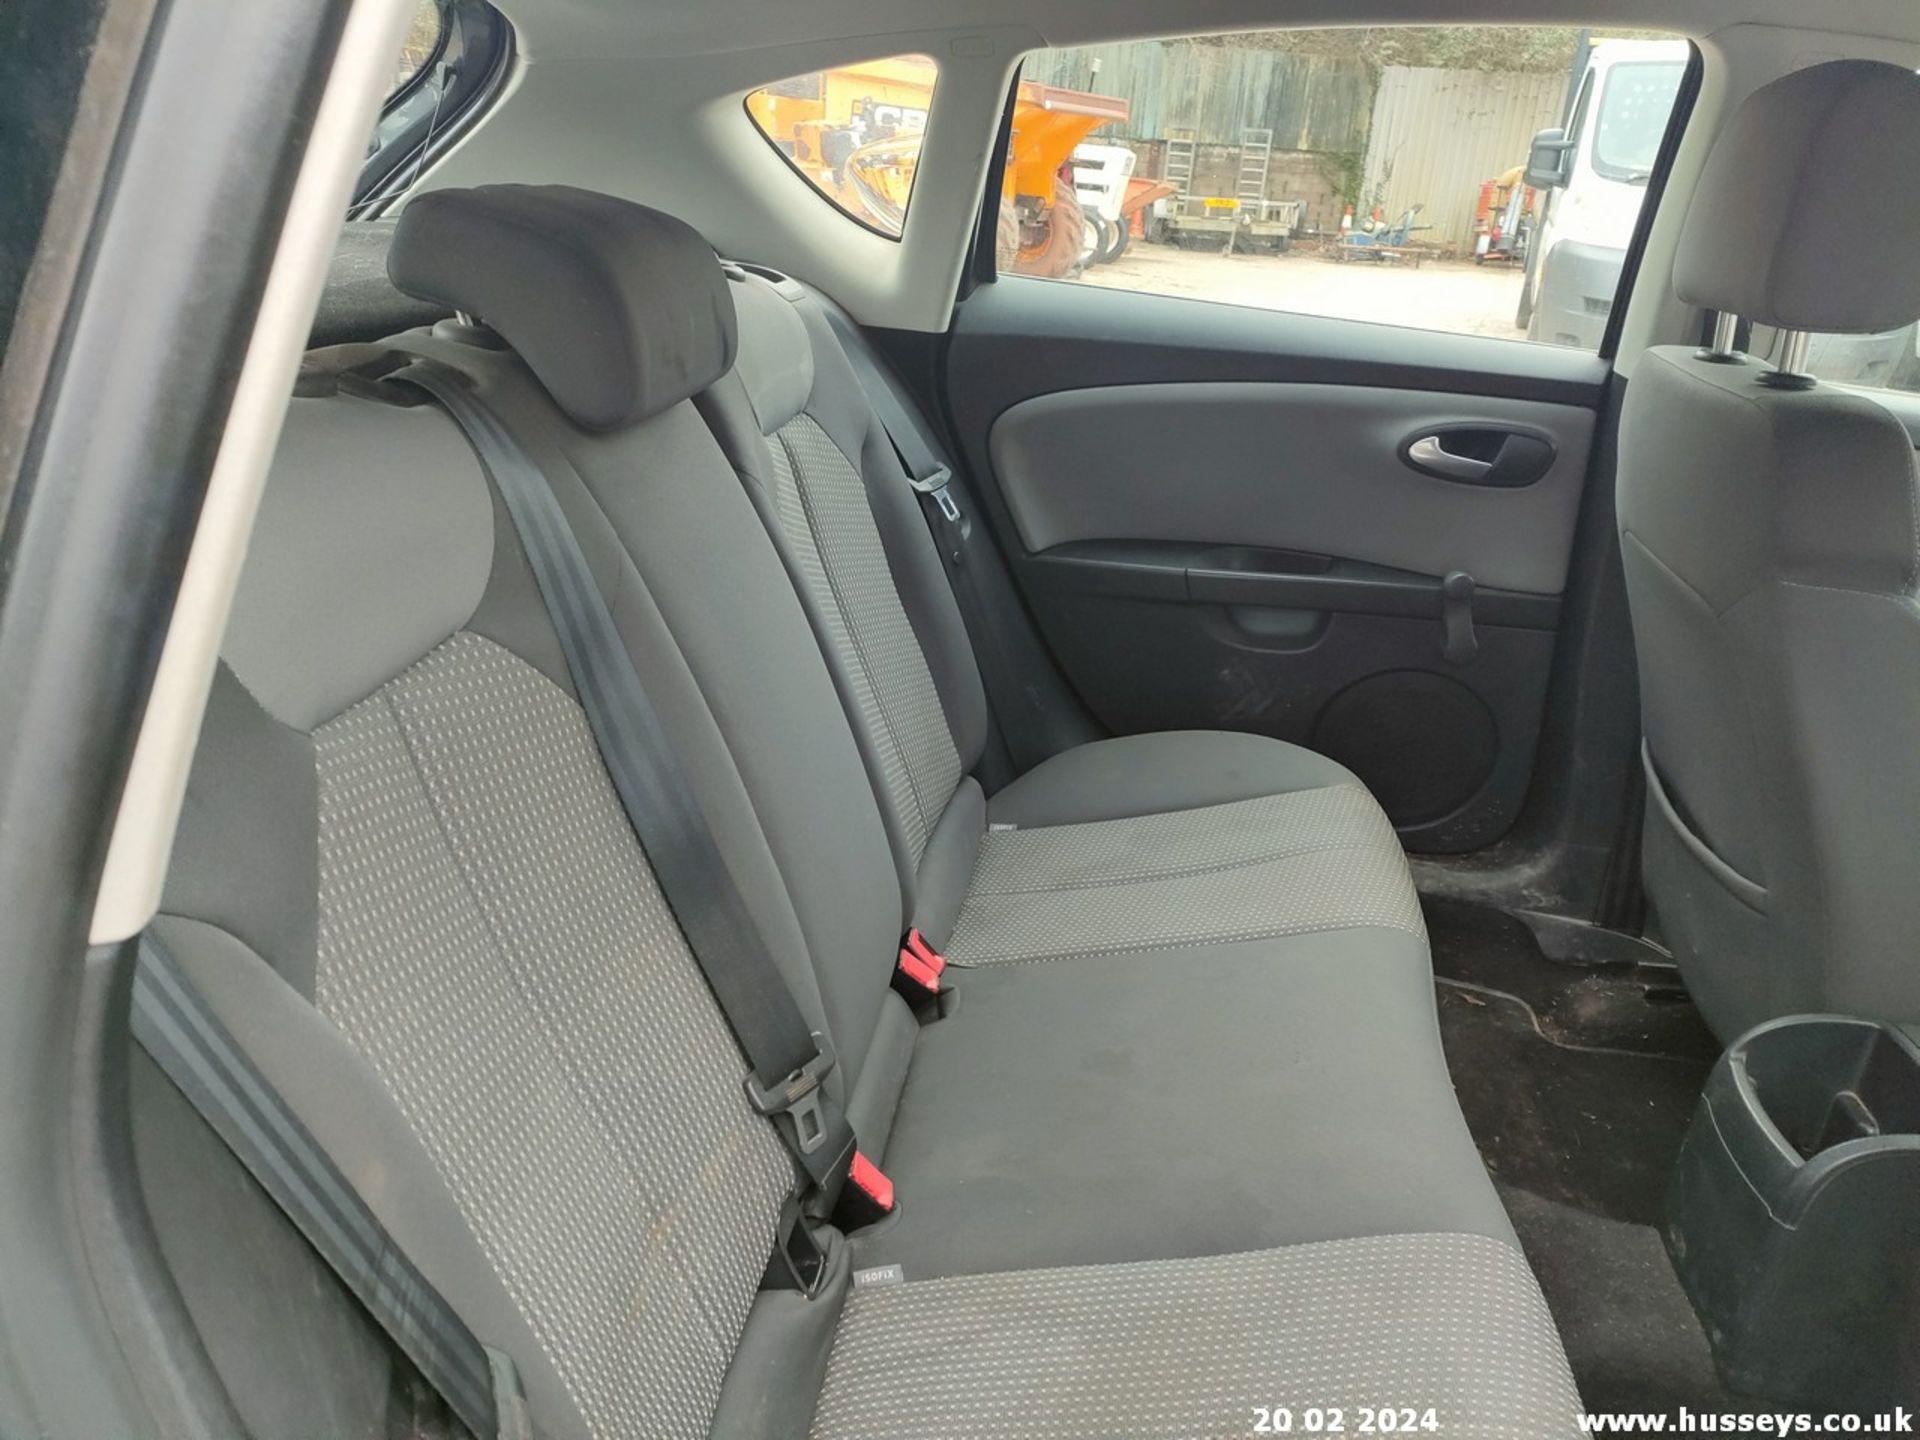 11/11 SEAT LEON S CR TDI - 1598cc 5dr Hatchback (Grey, 160k) - Image 42 of 48